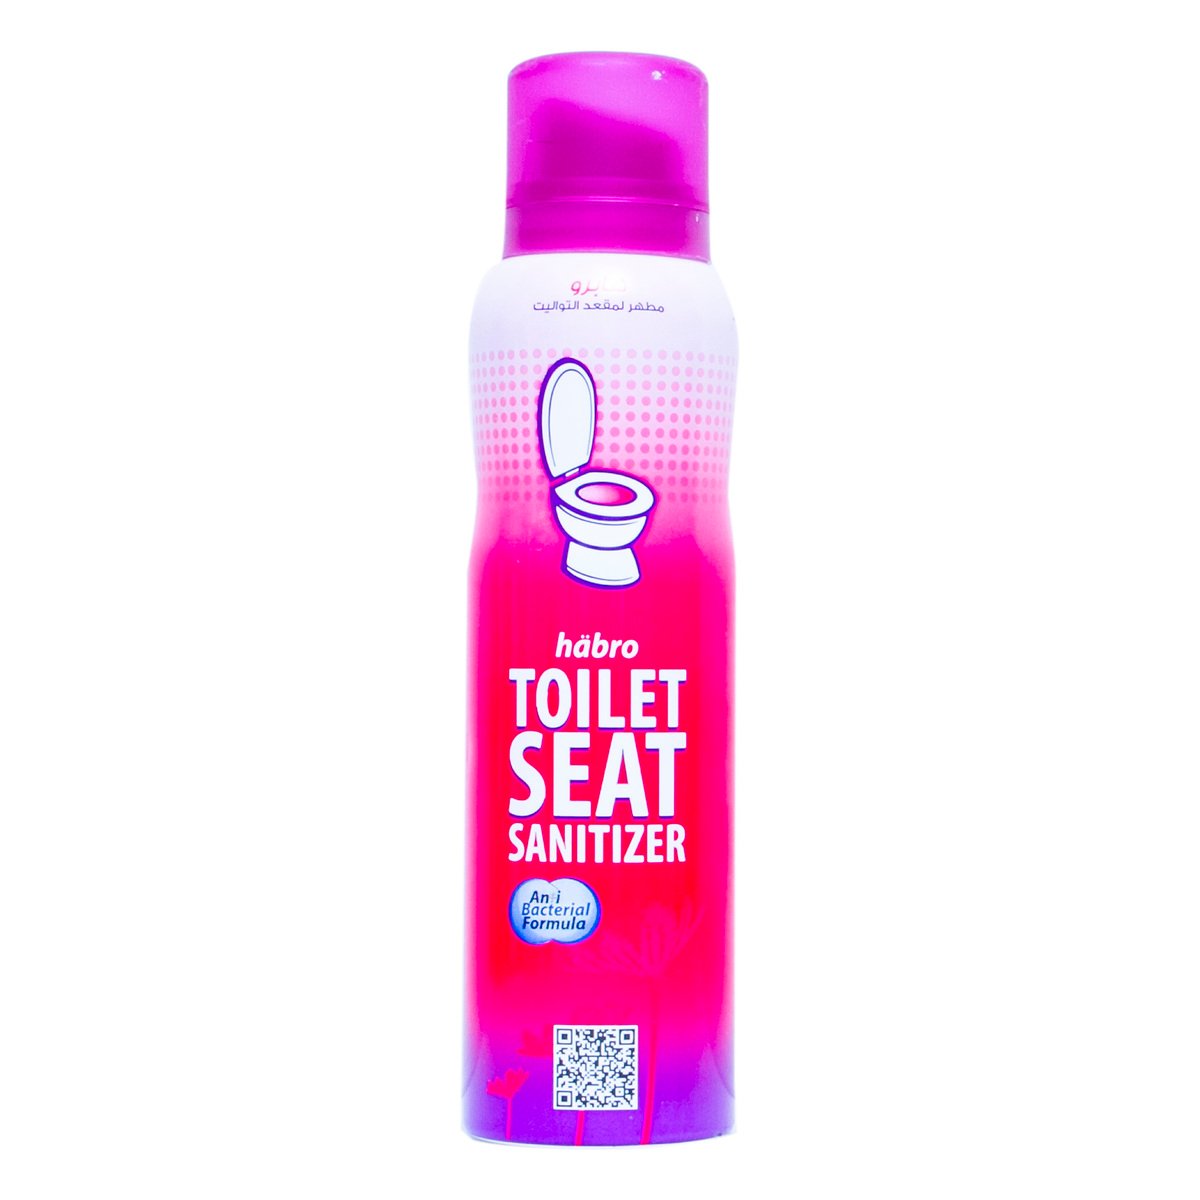 Habro Toilet Seat Sanitizer, 150 ml